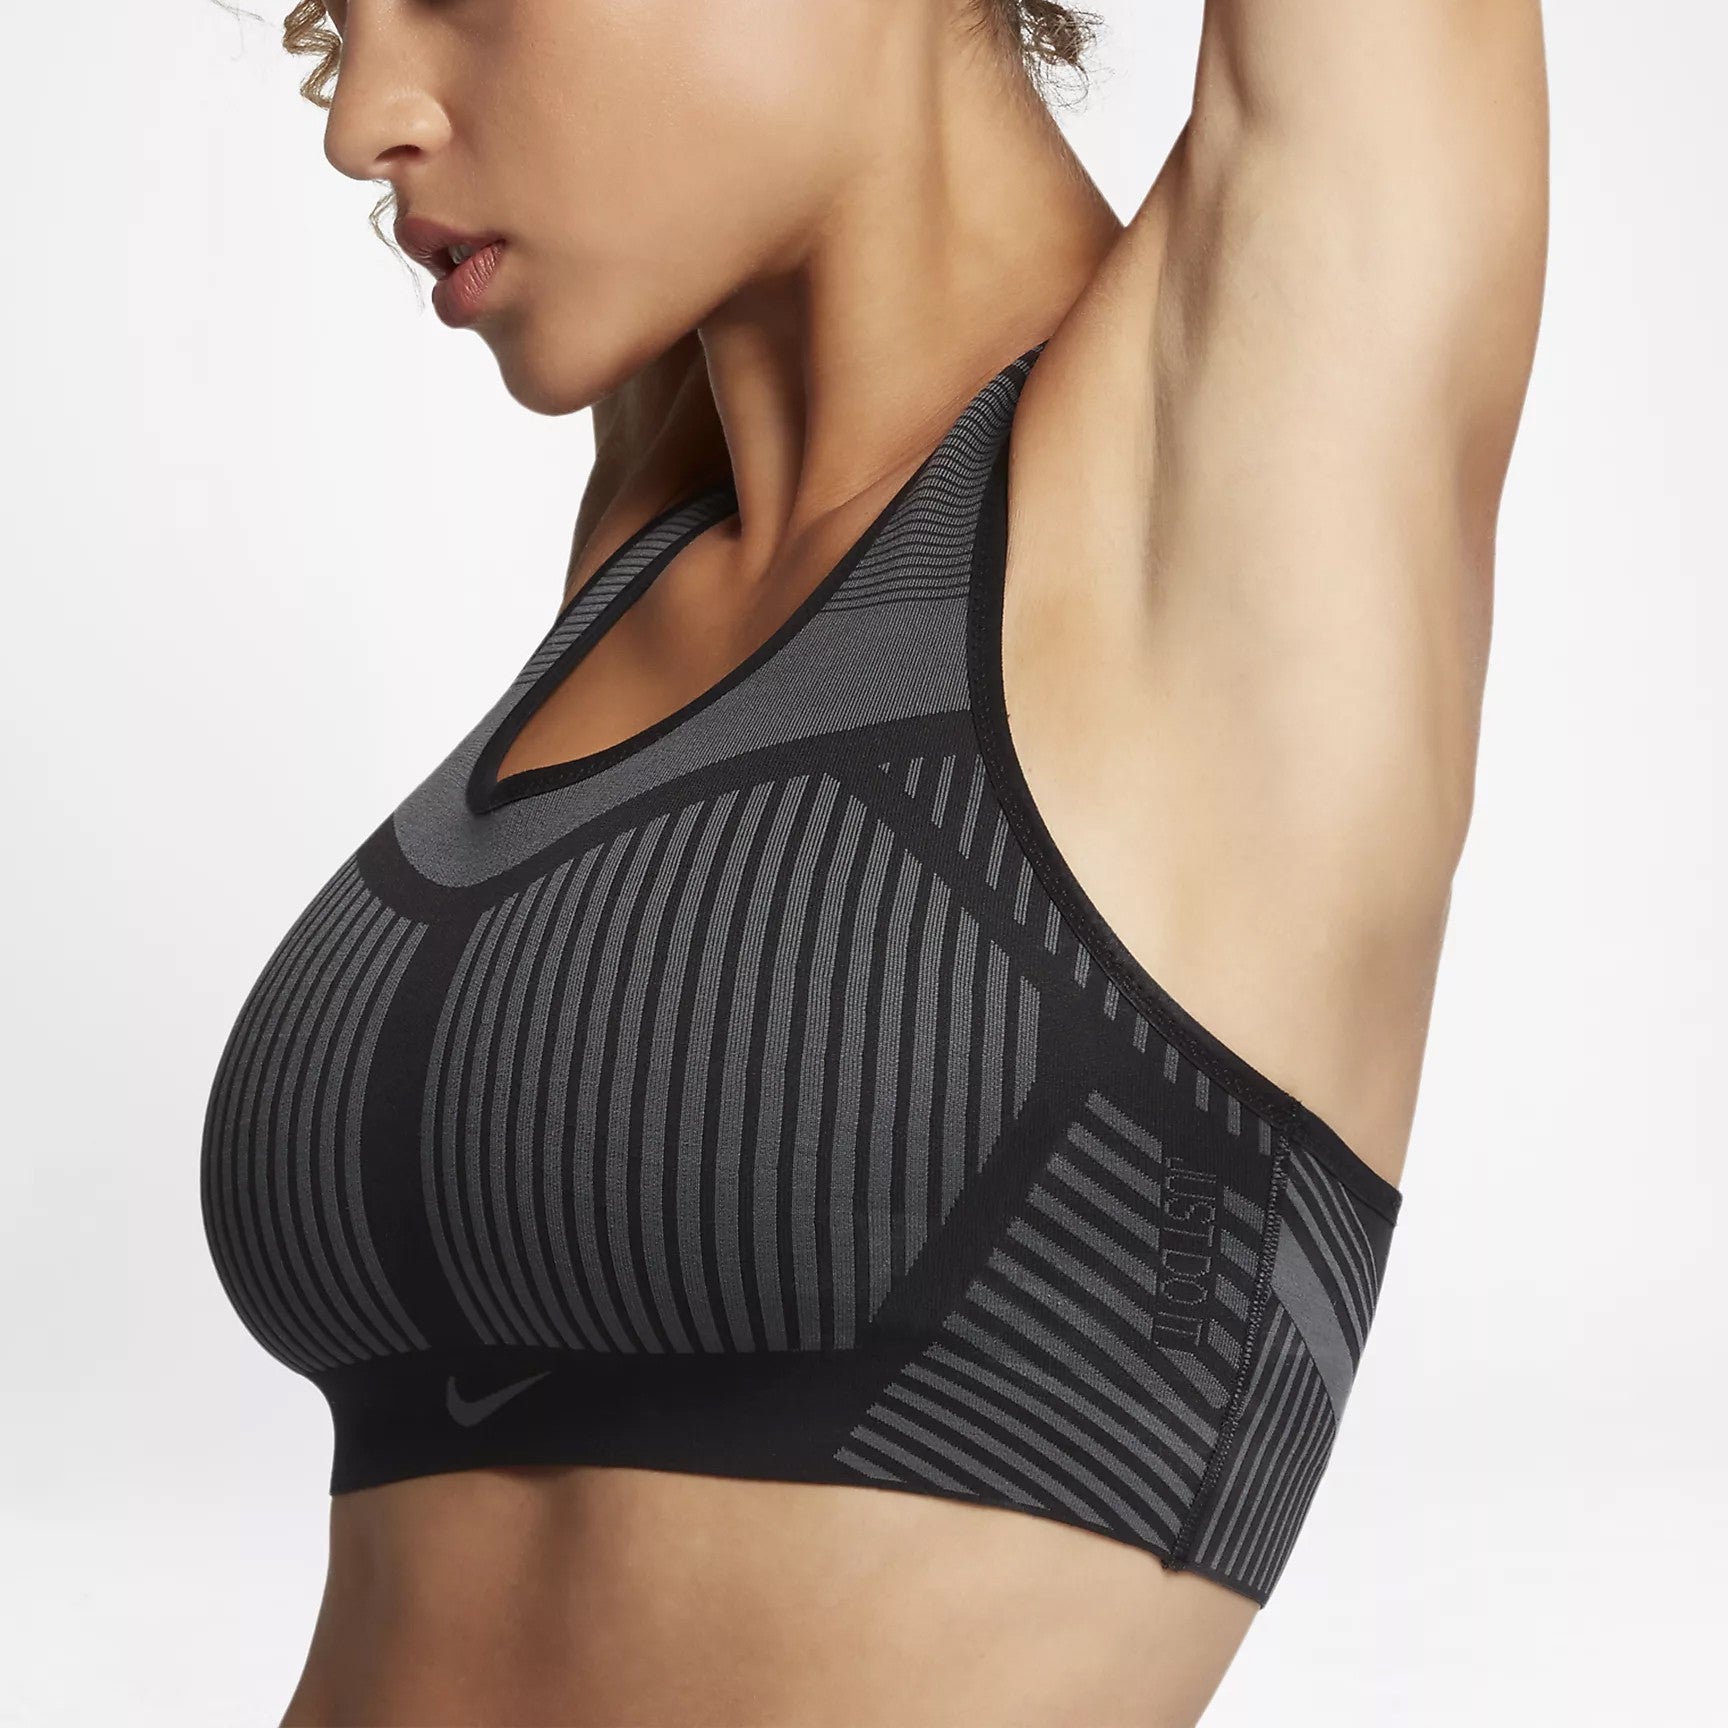 Nike FE/NOM Flyknit Sports Bra Black Size XL - $46 (64% Off Retail